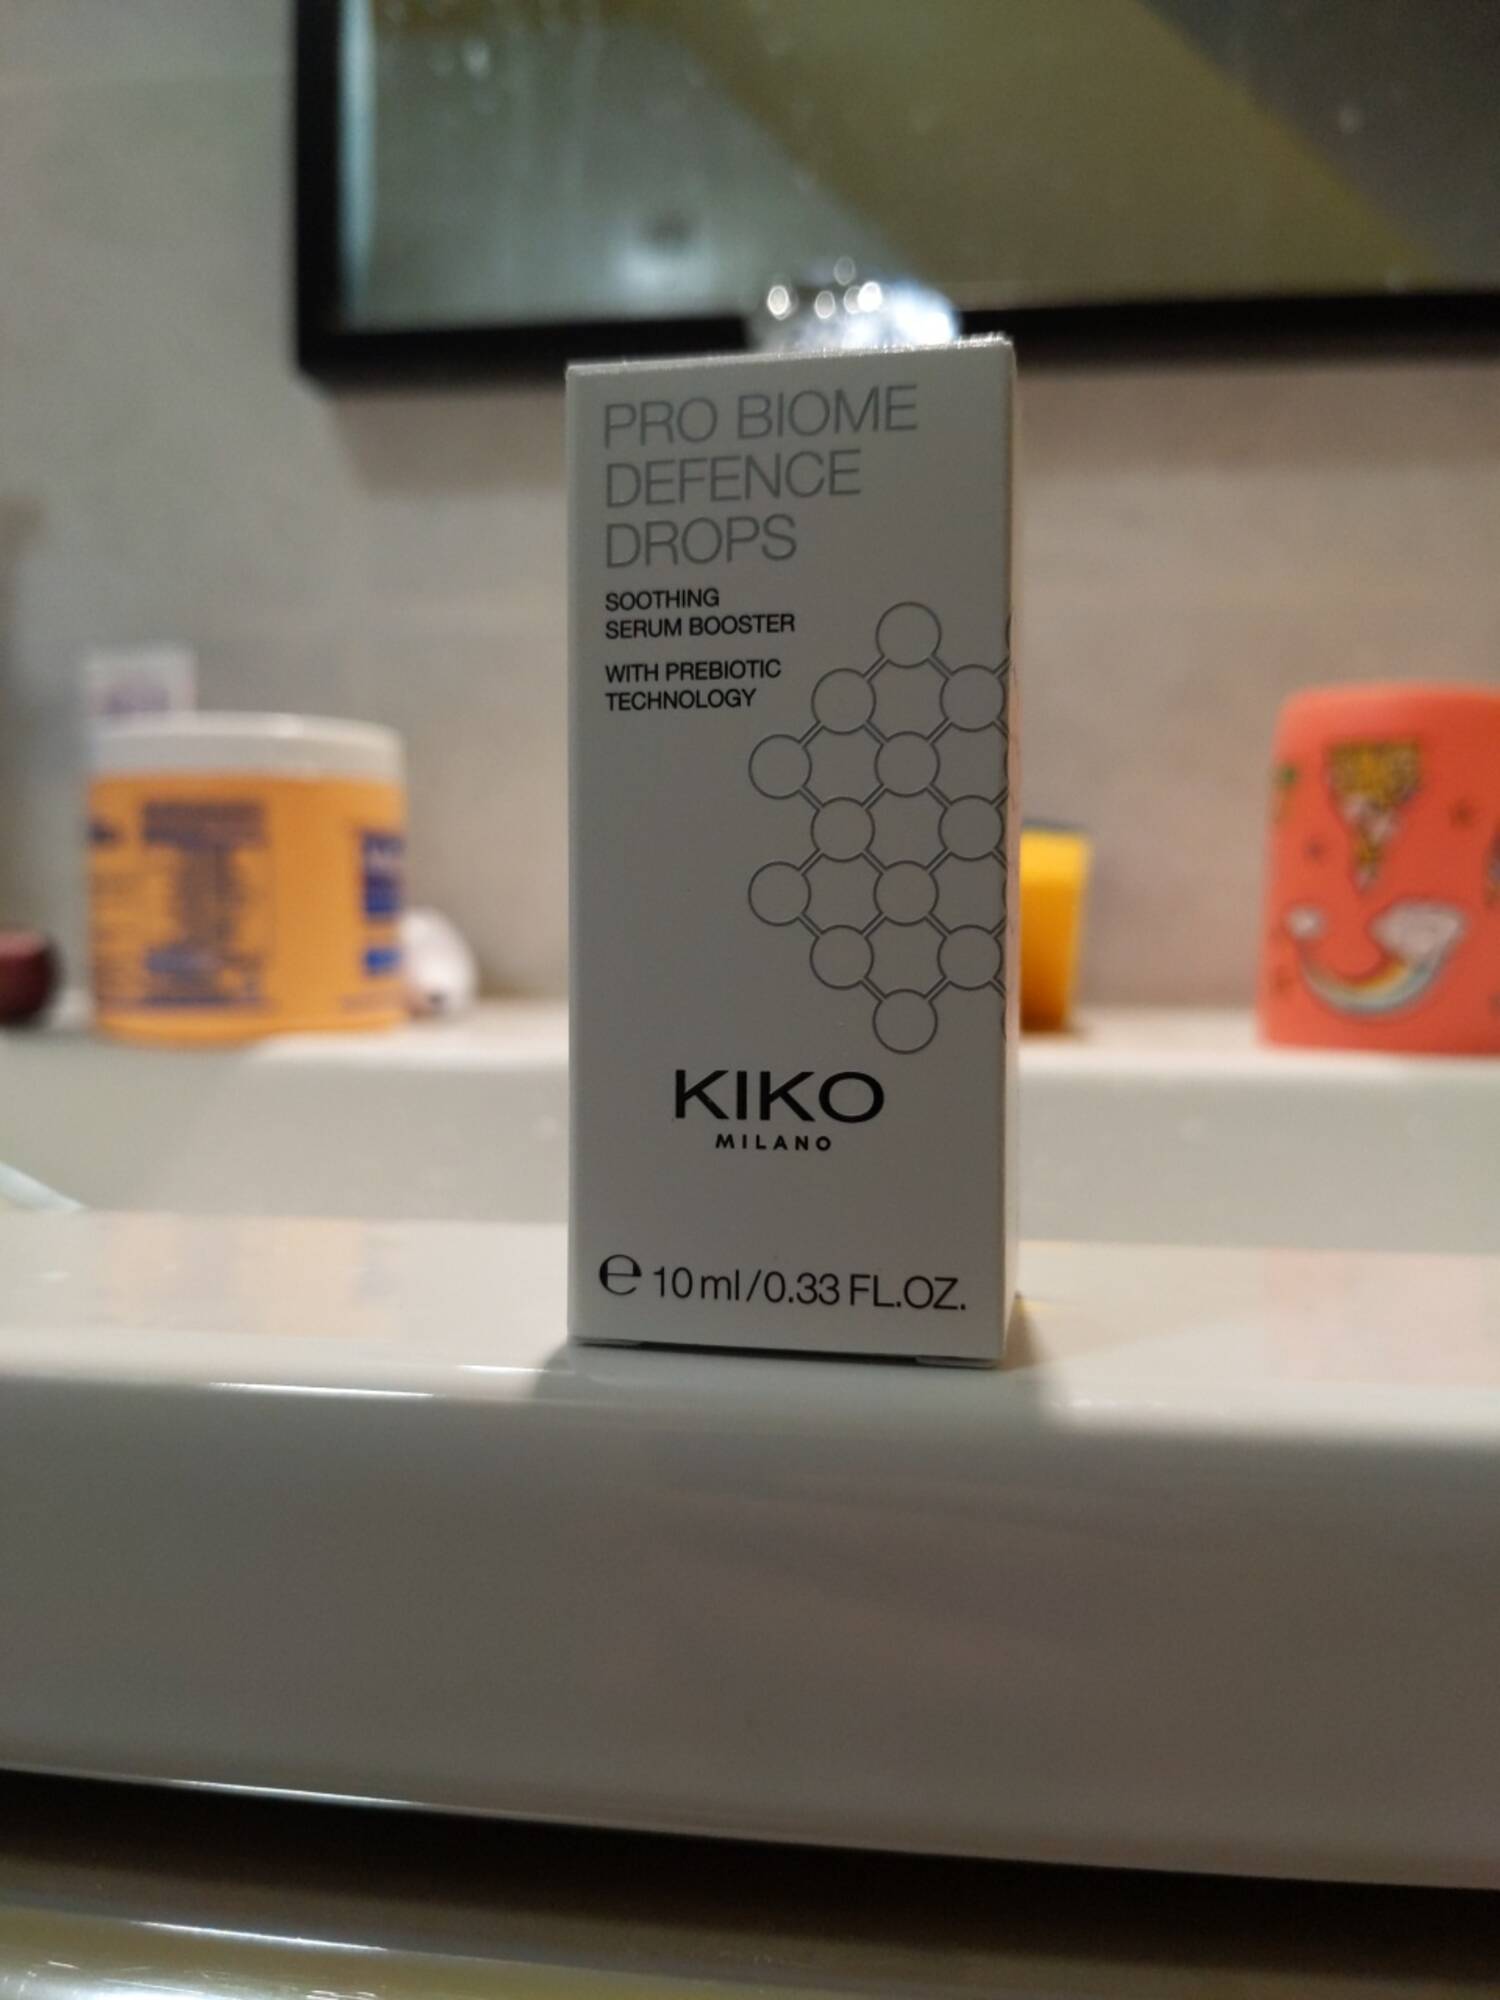 KIKO - Pro biome defence drops